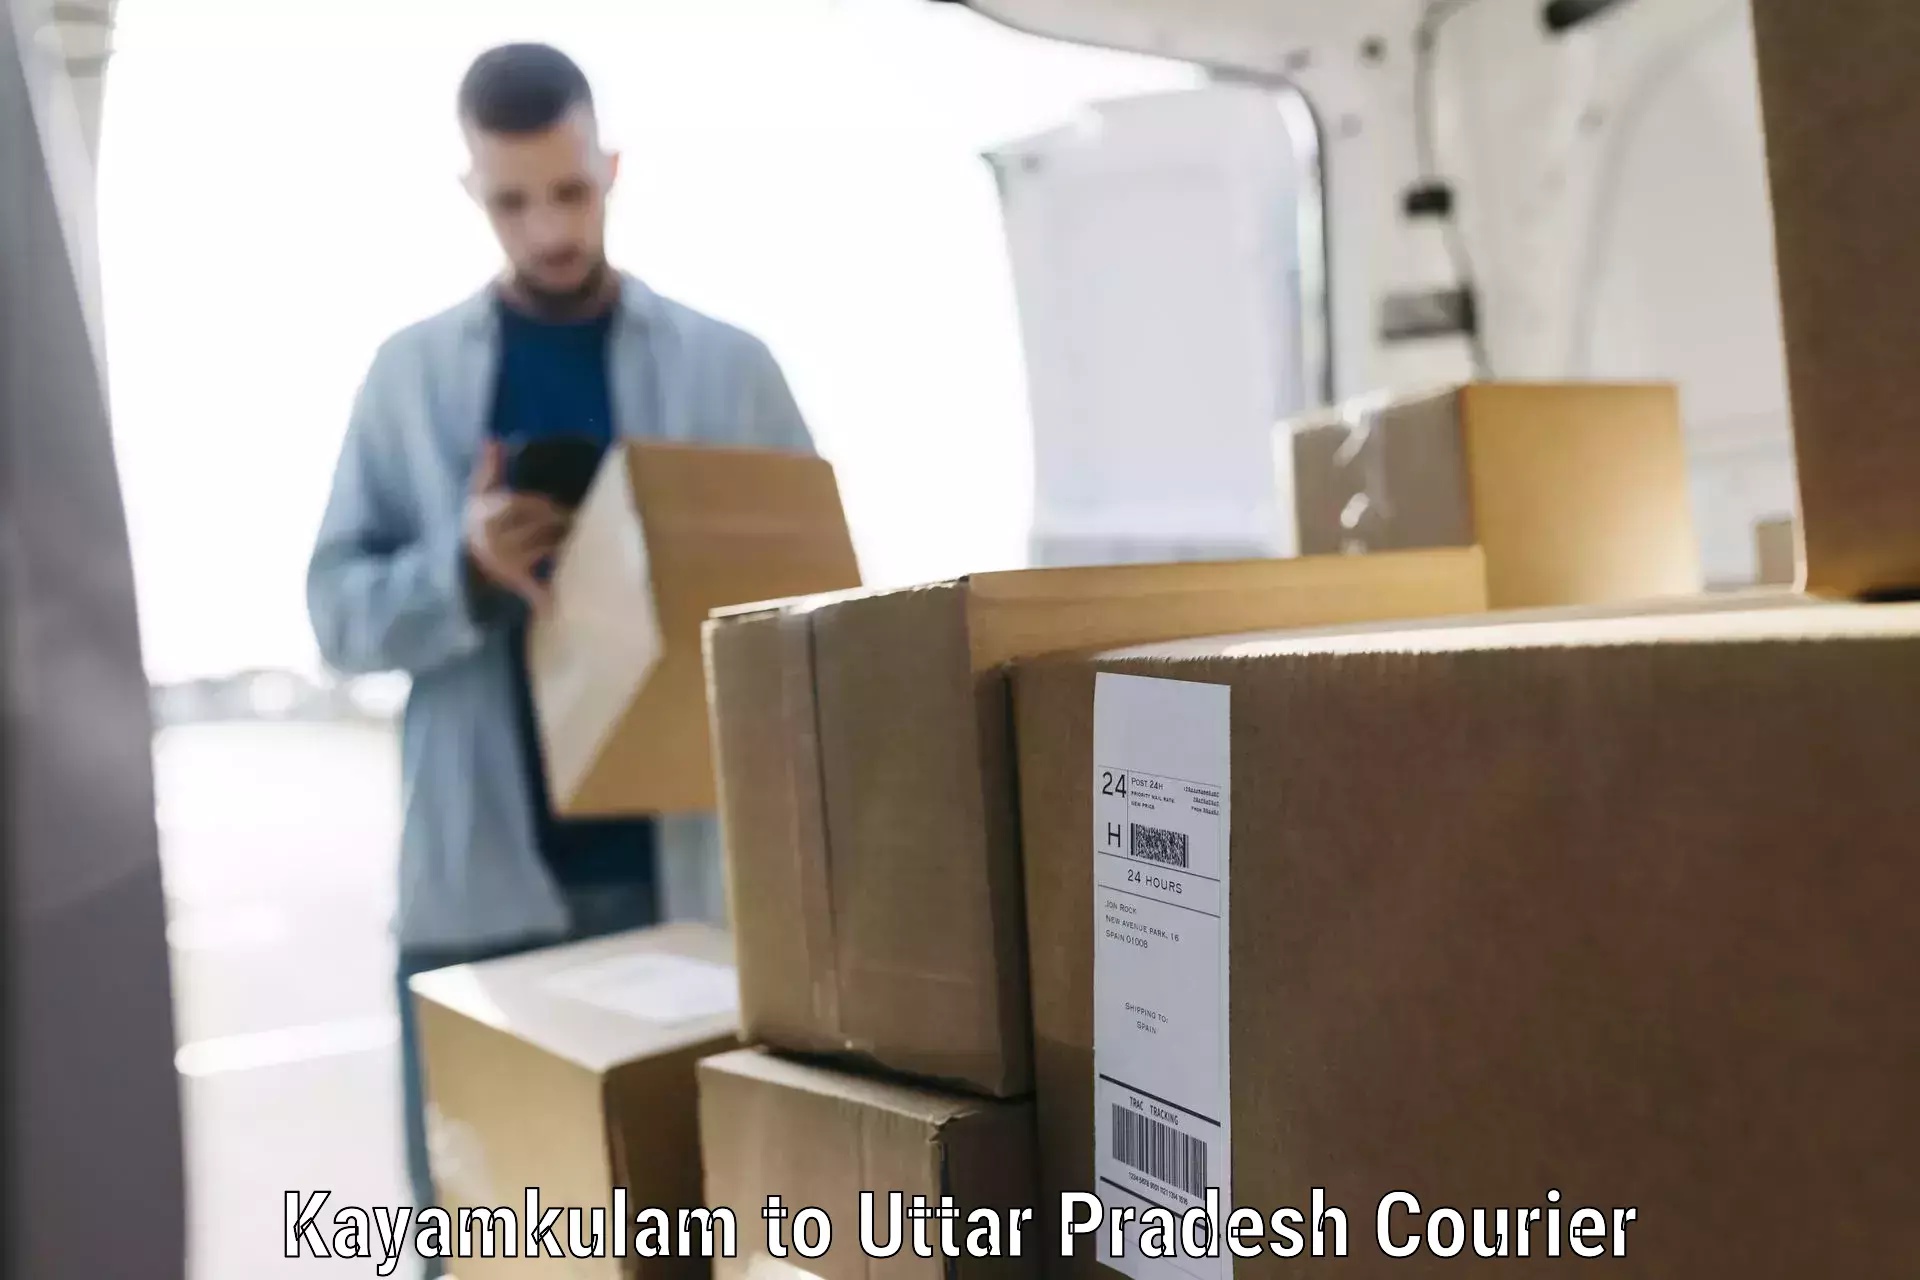 Luggage transport service Kayamkulam to Uttar Pradesh